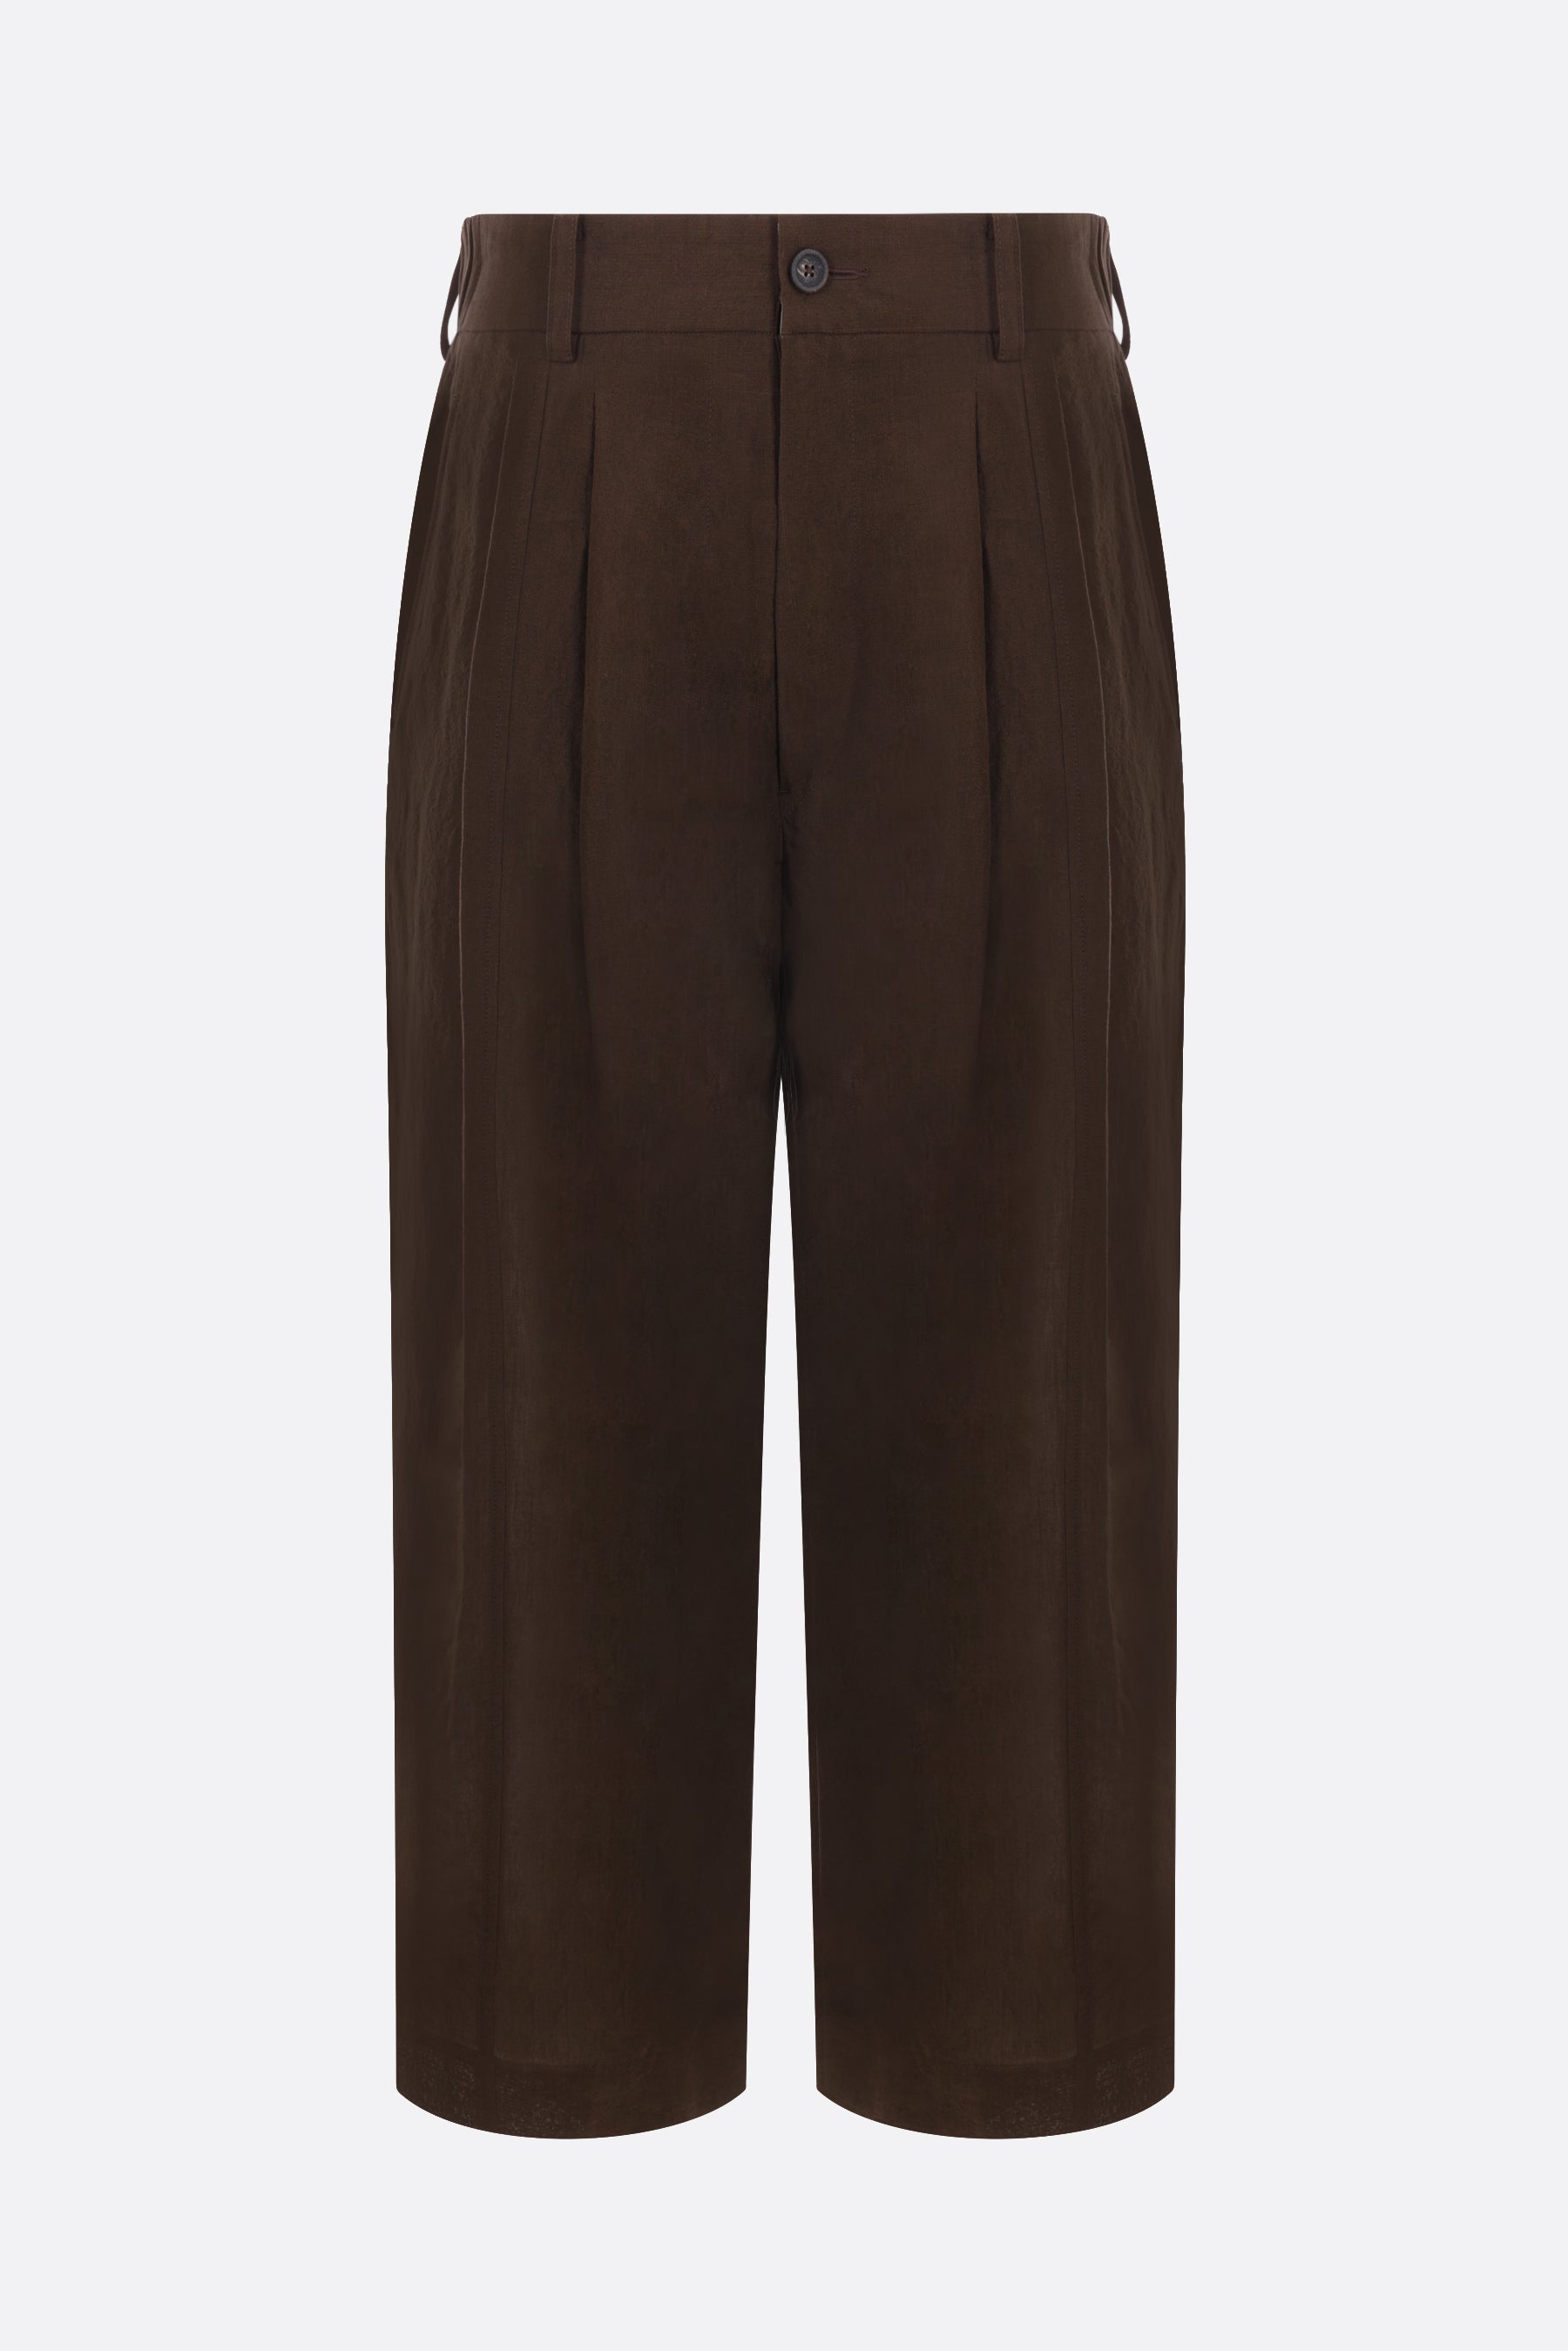 pantalone cropped in lino increspato